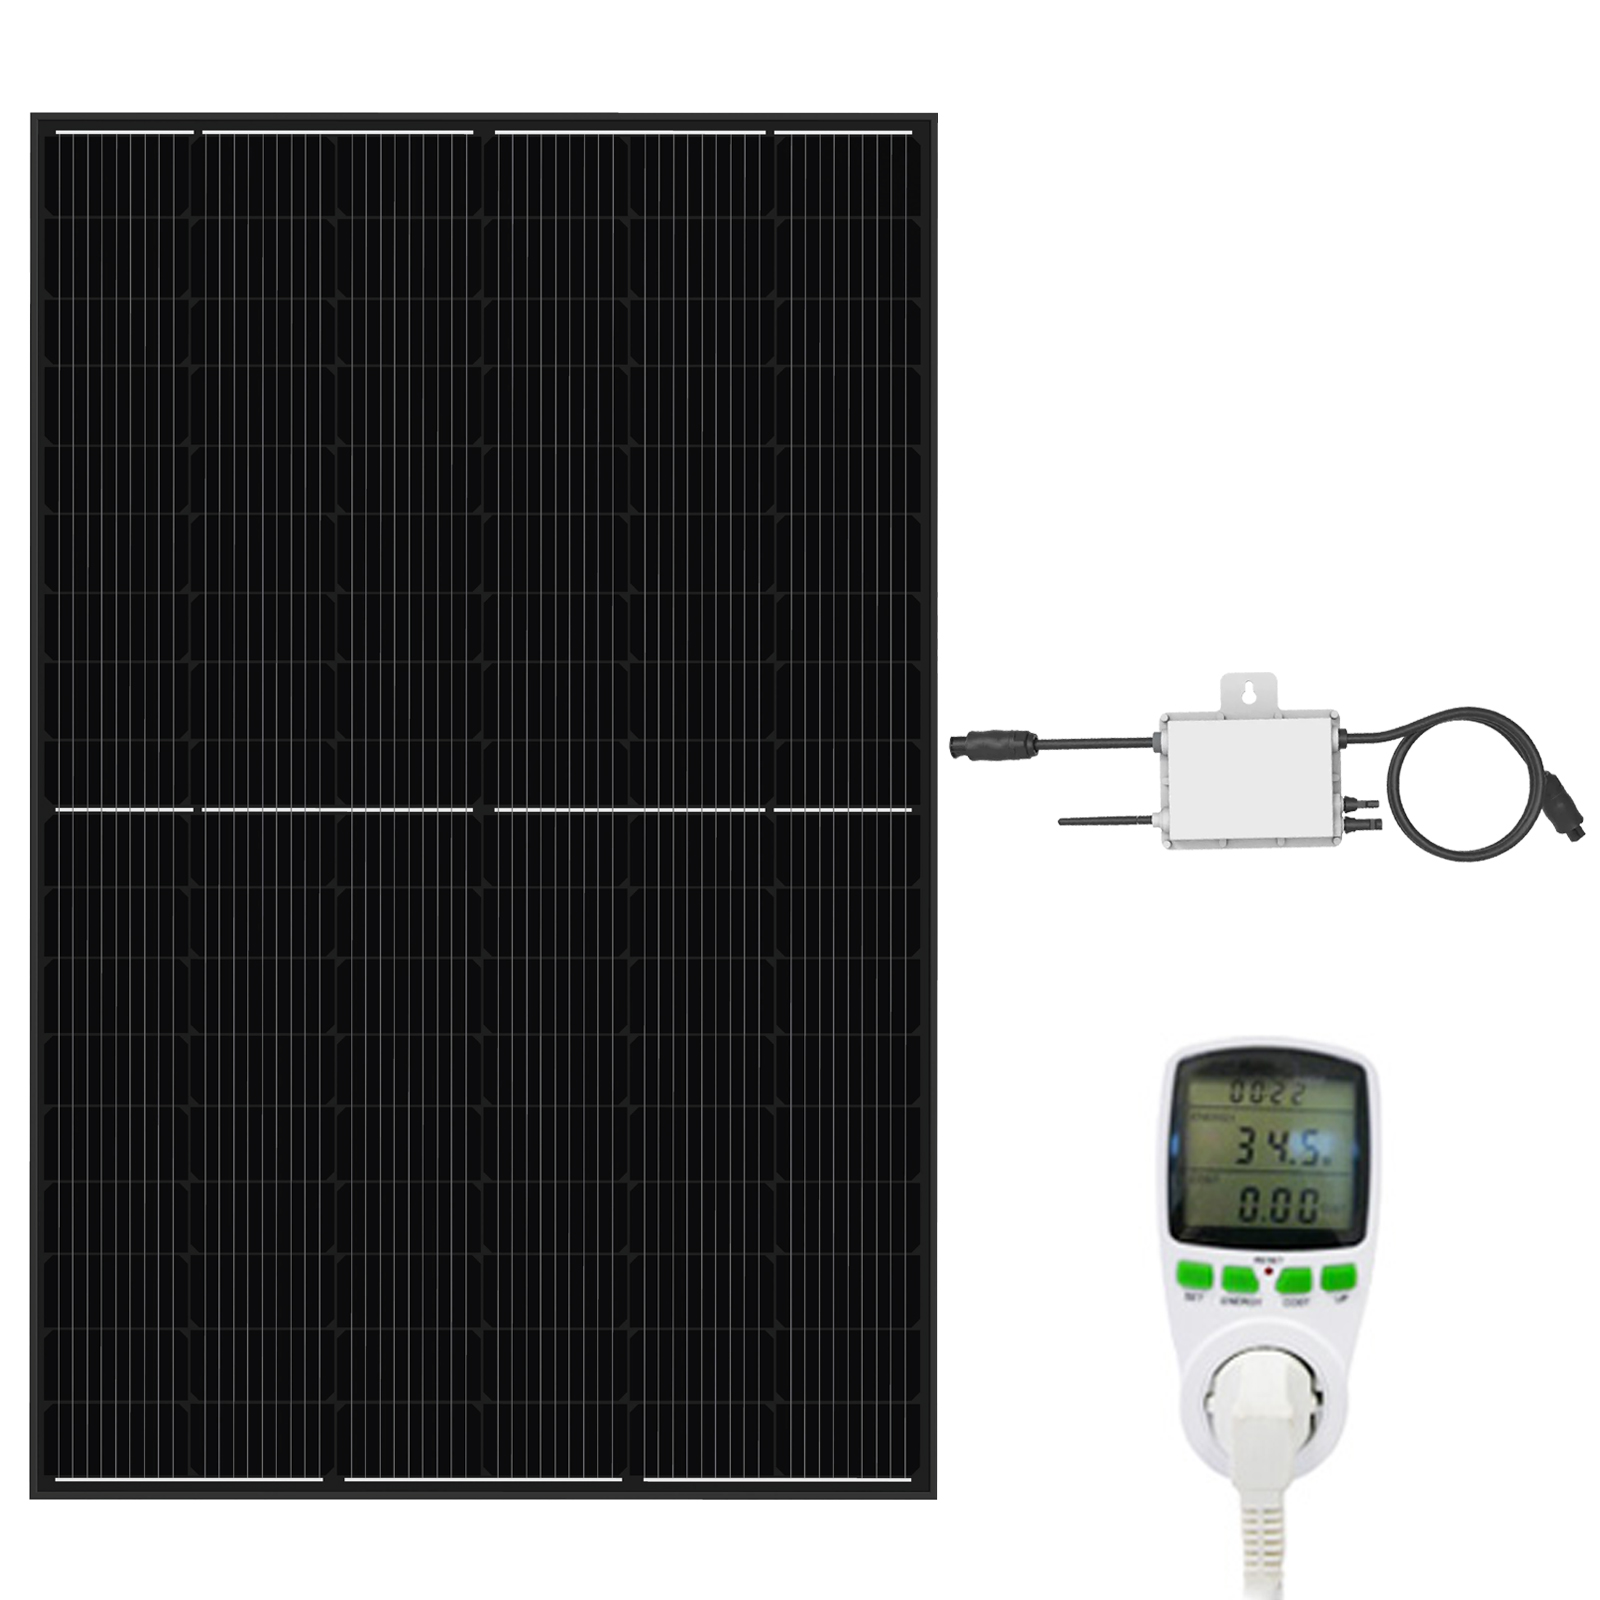 Solar-PV 400 Balkonkraftwerke Komplettset – Solar Anlage Balkonsystem mit Einspeise Messgerät